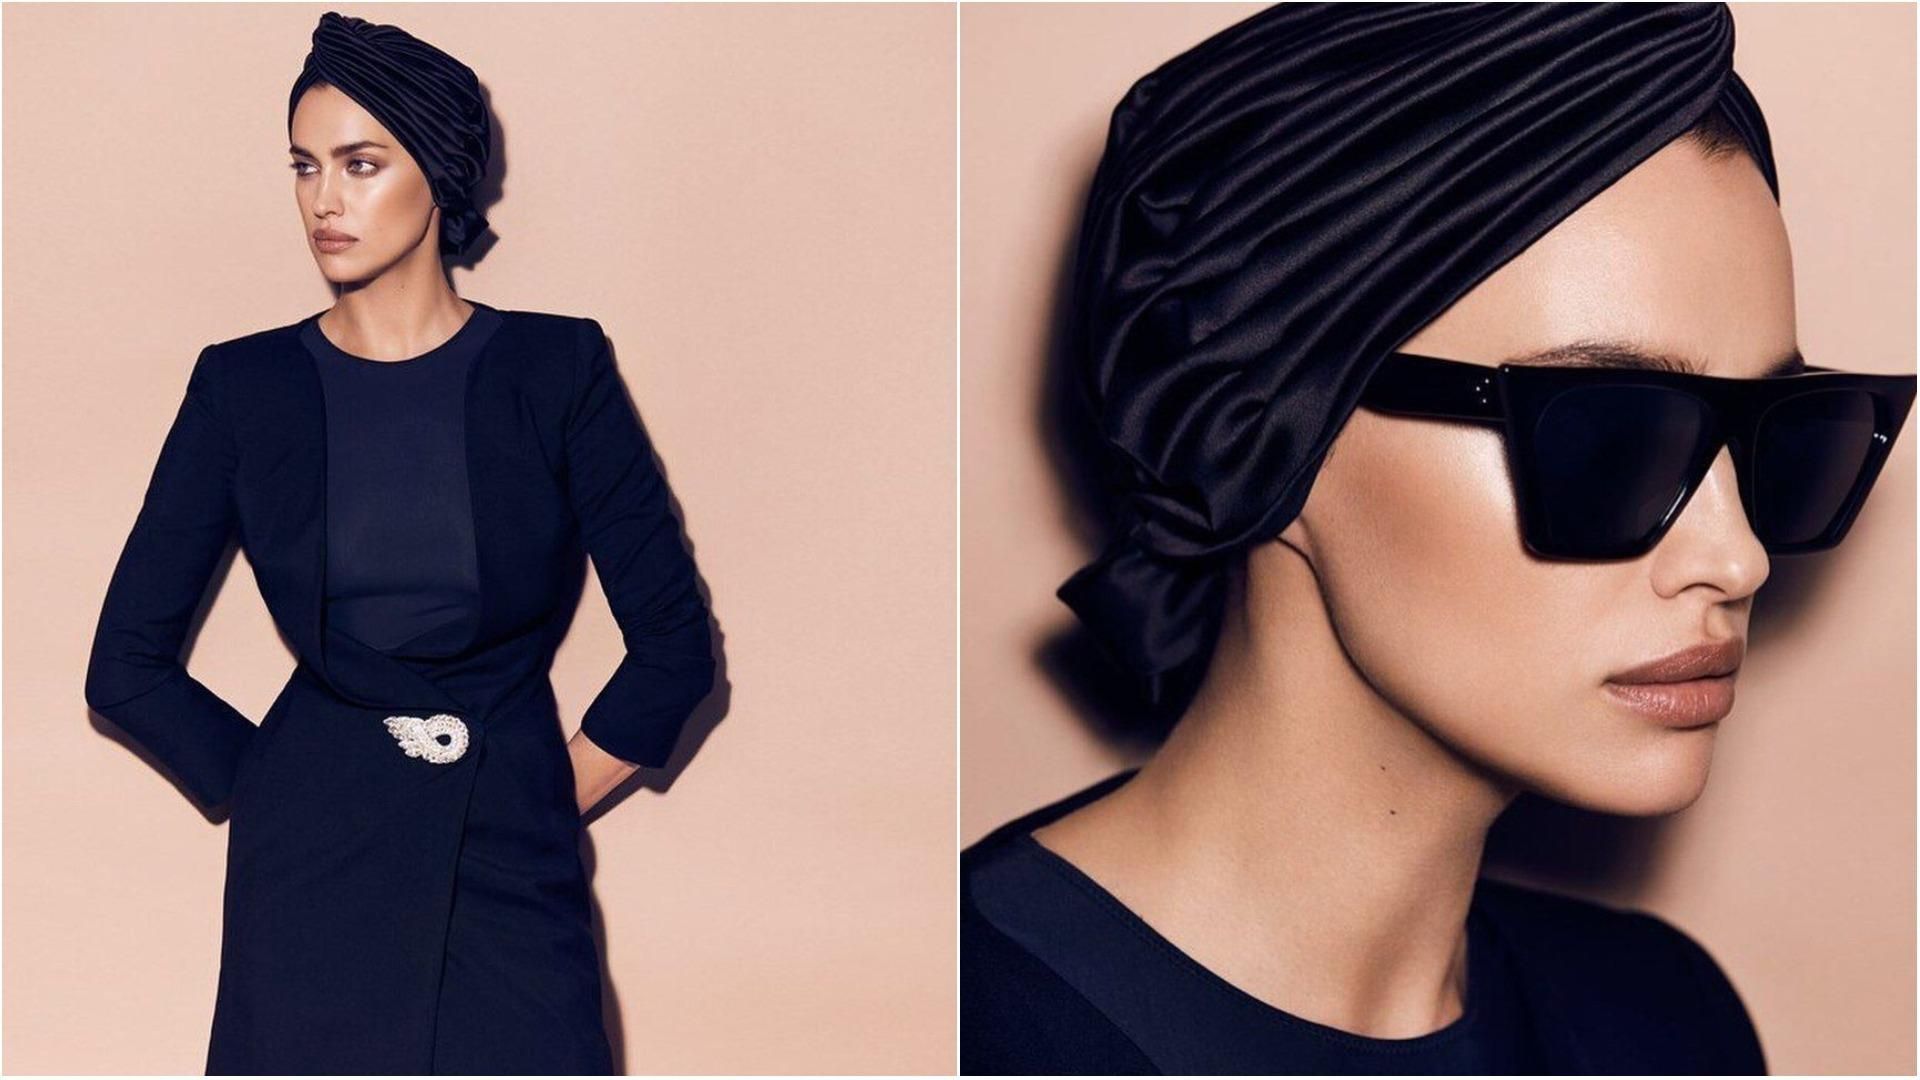 Ірина Шейк знялась в елегантних образах для Vogue Arabia: фото